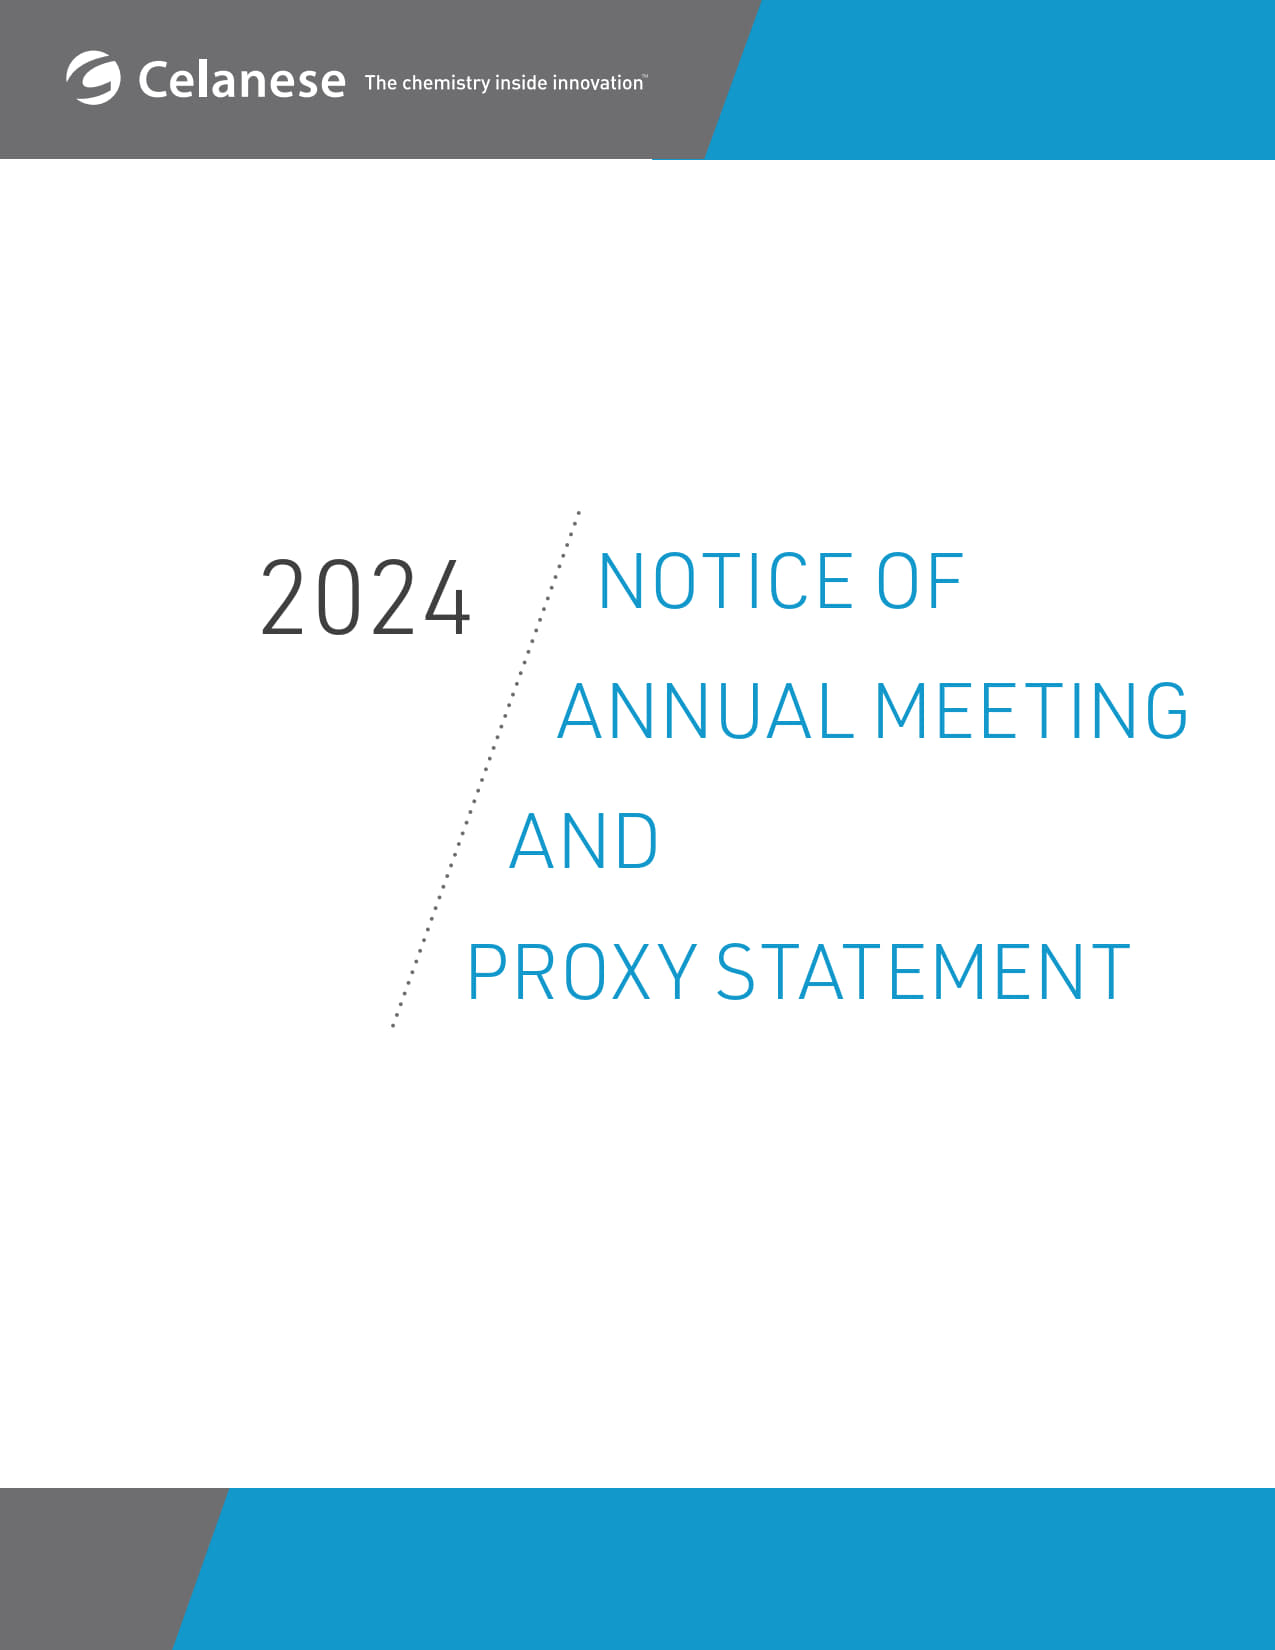 2024_Proxy_cover_1.jpg